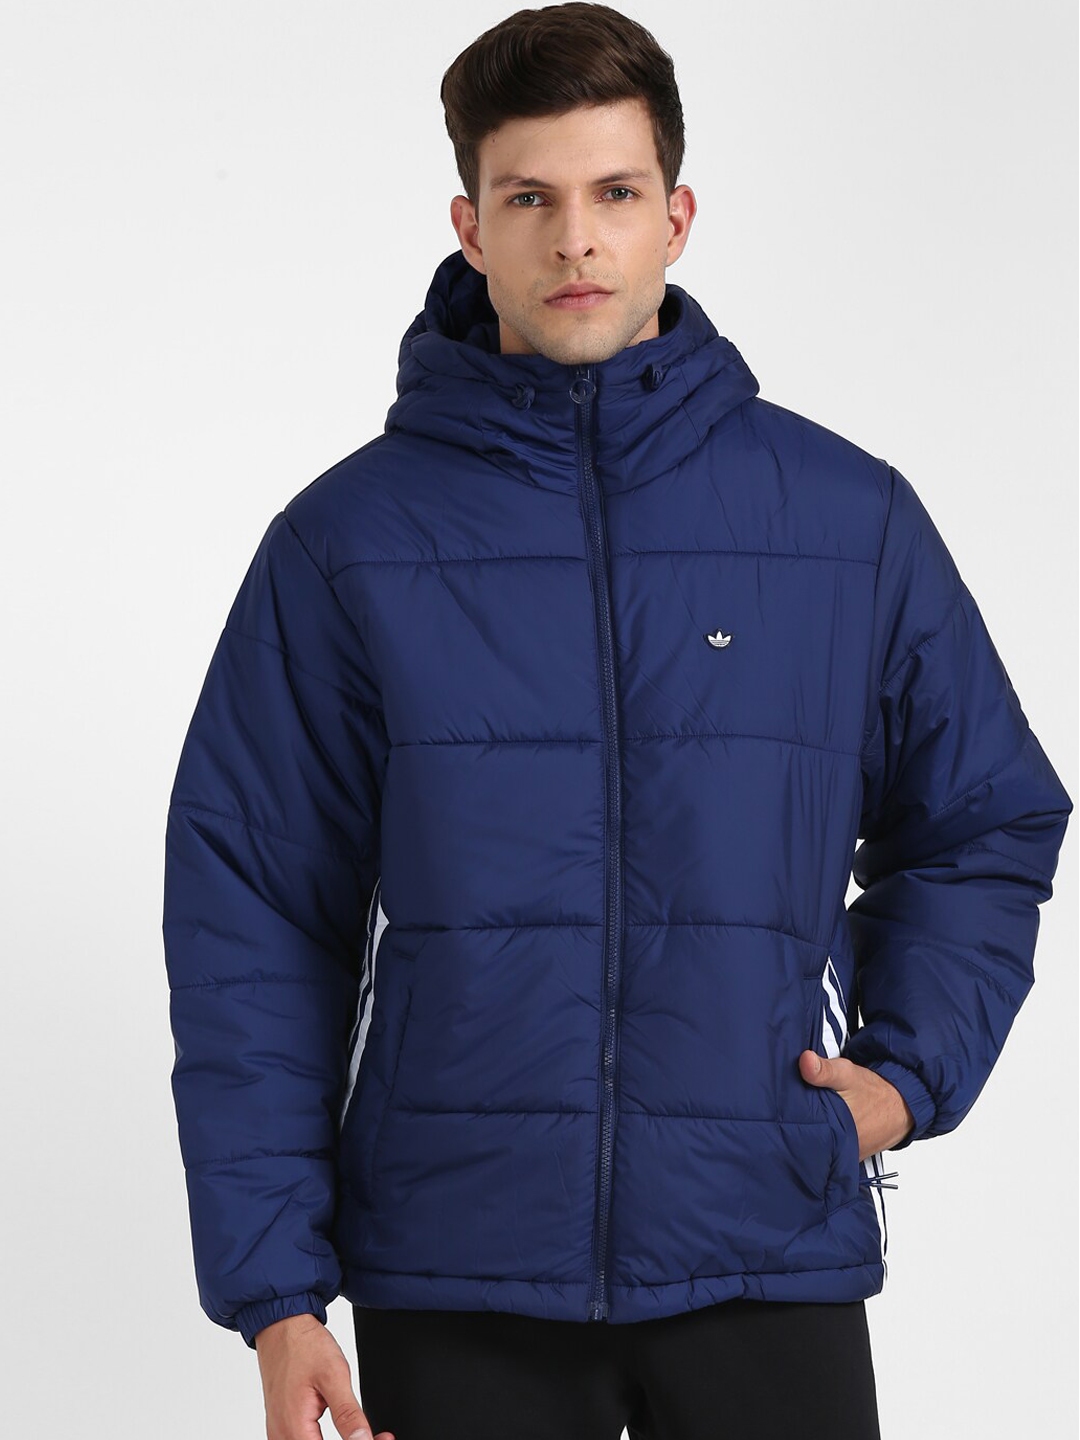 Buy ADIDAS Originals Men Blue Puffer Jacket - Jackets for Men 16289836 ...